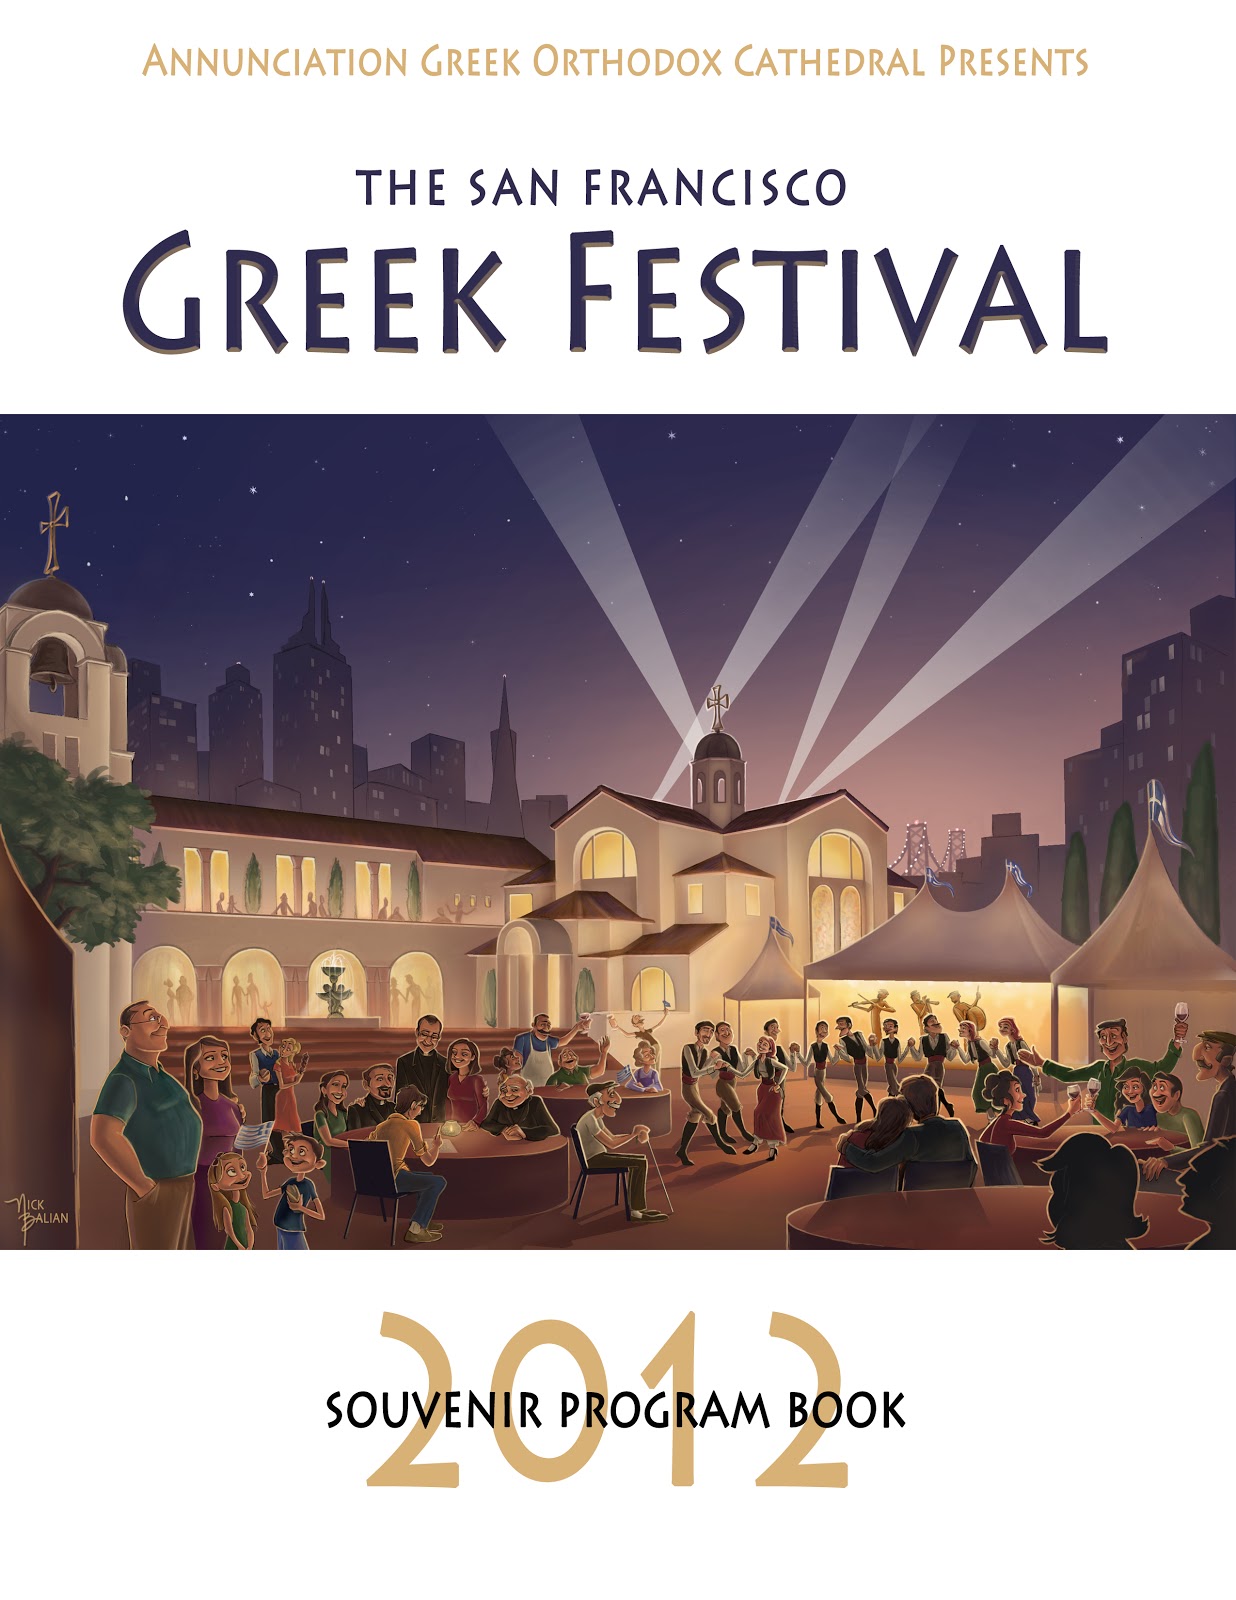 The Art of Nick Balian SF Greek Festival Souvenir Booklet Art